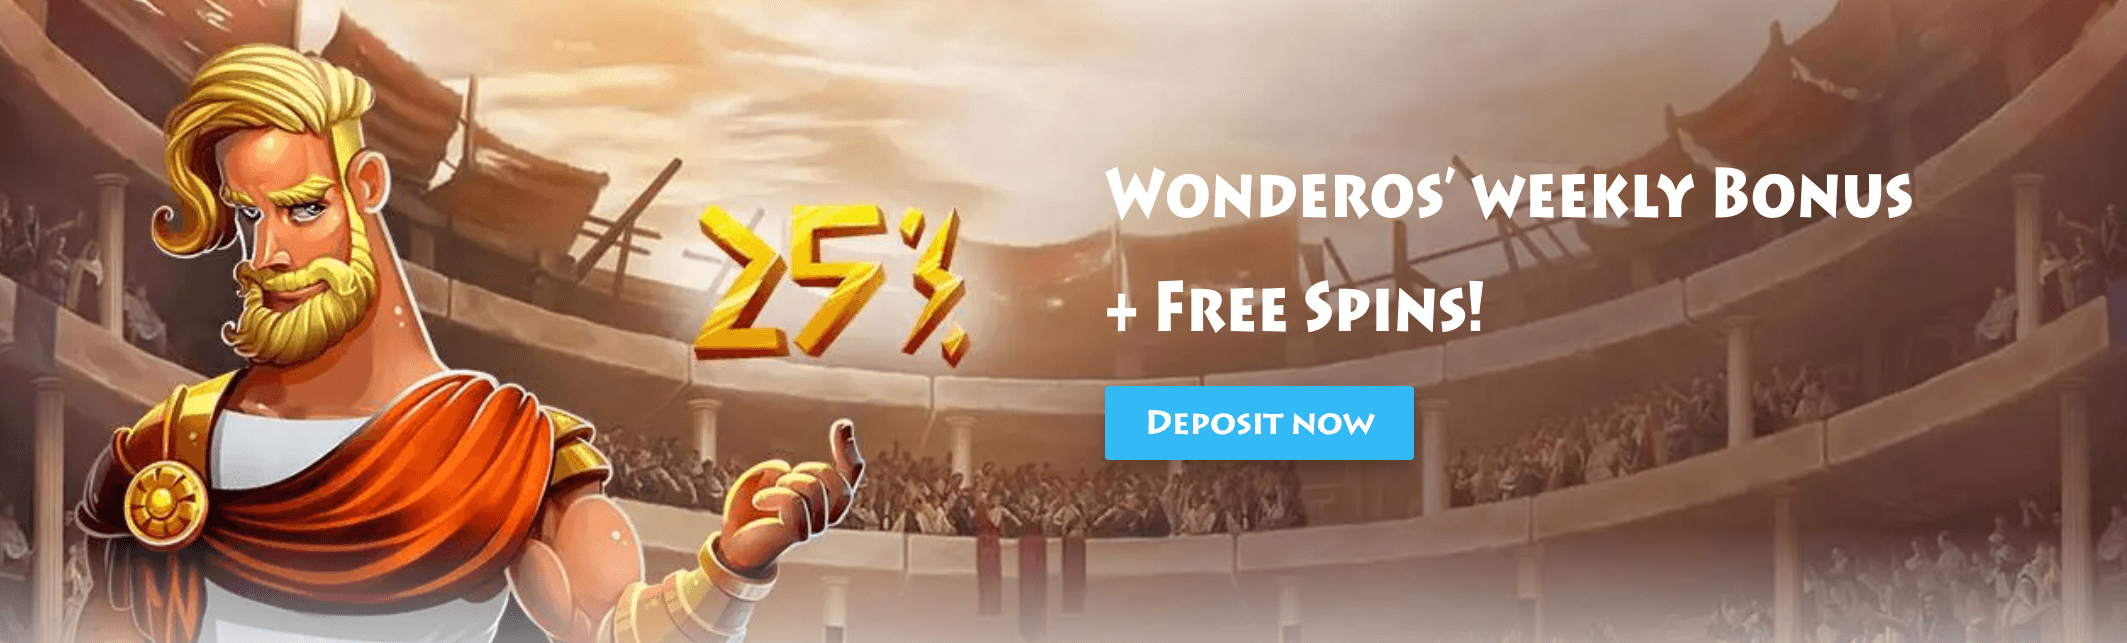 Casino Gods Wonderos’ weekly Bonus + Free Spins!